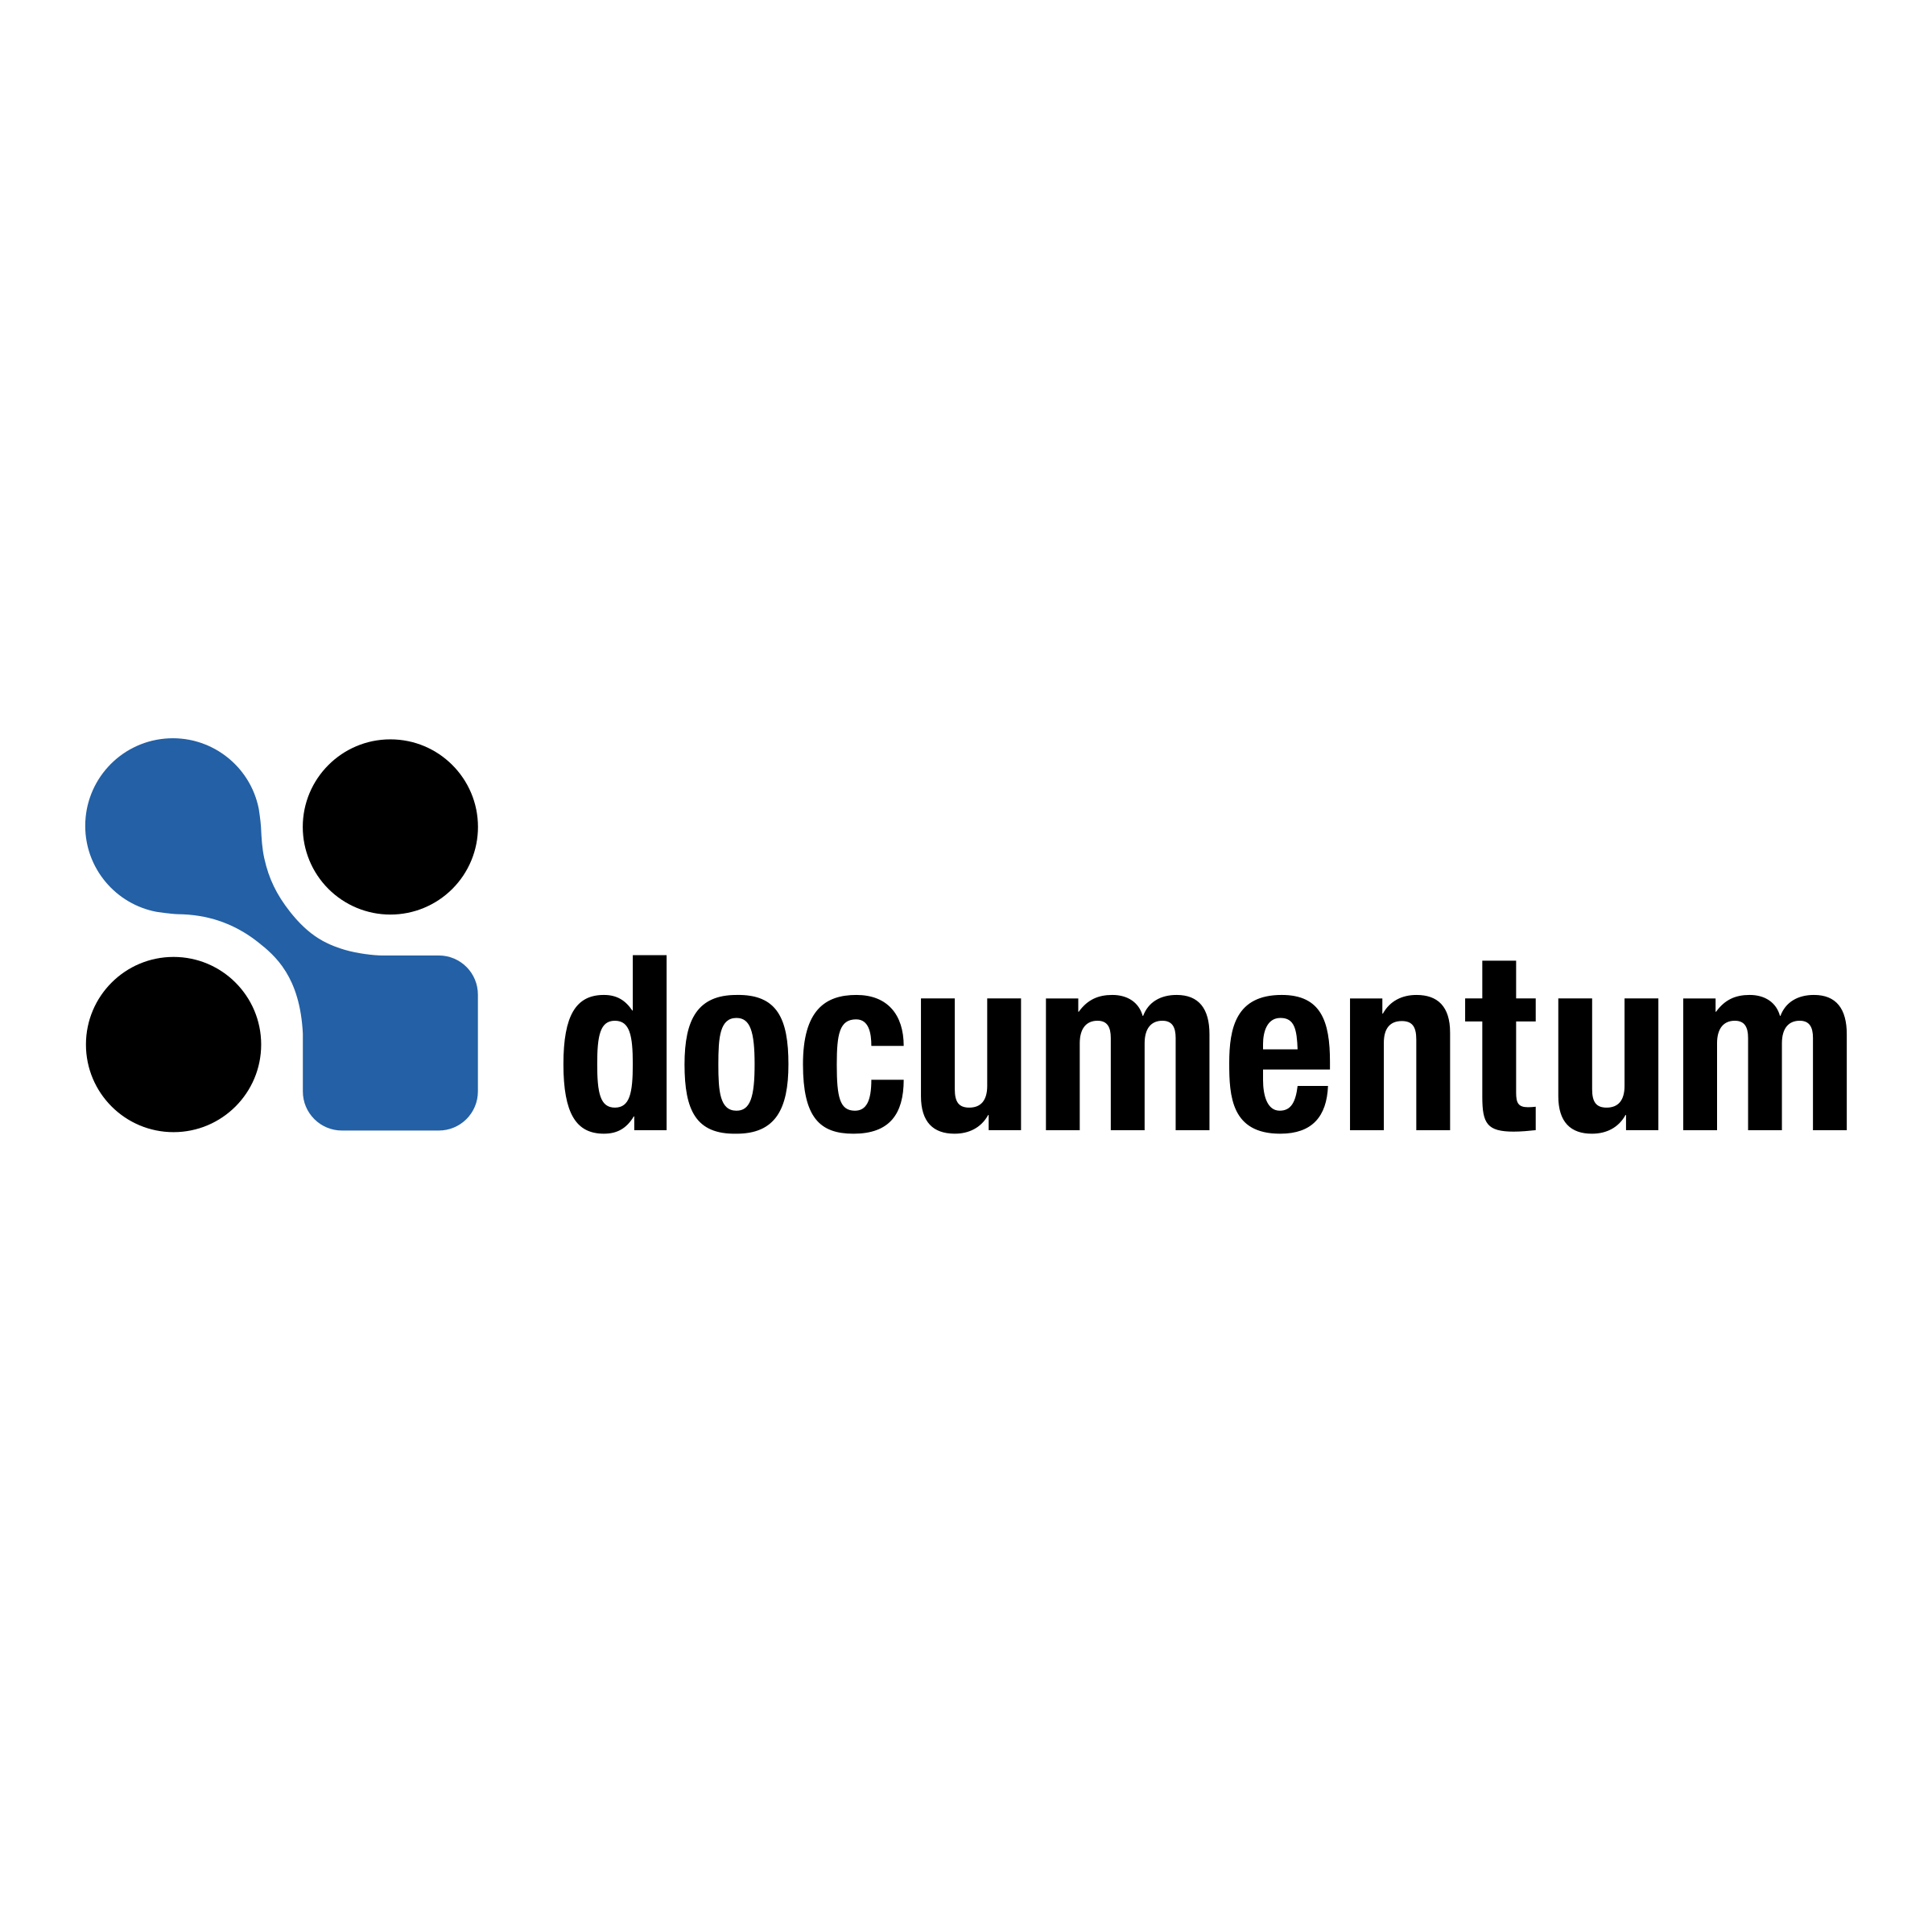 Documentum Logo - Documentum Logo PNG Transparent & SVG Vector